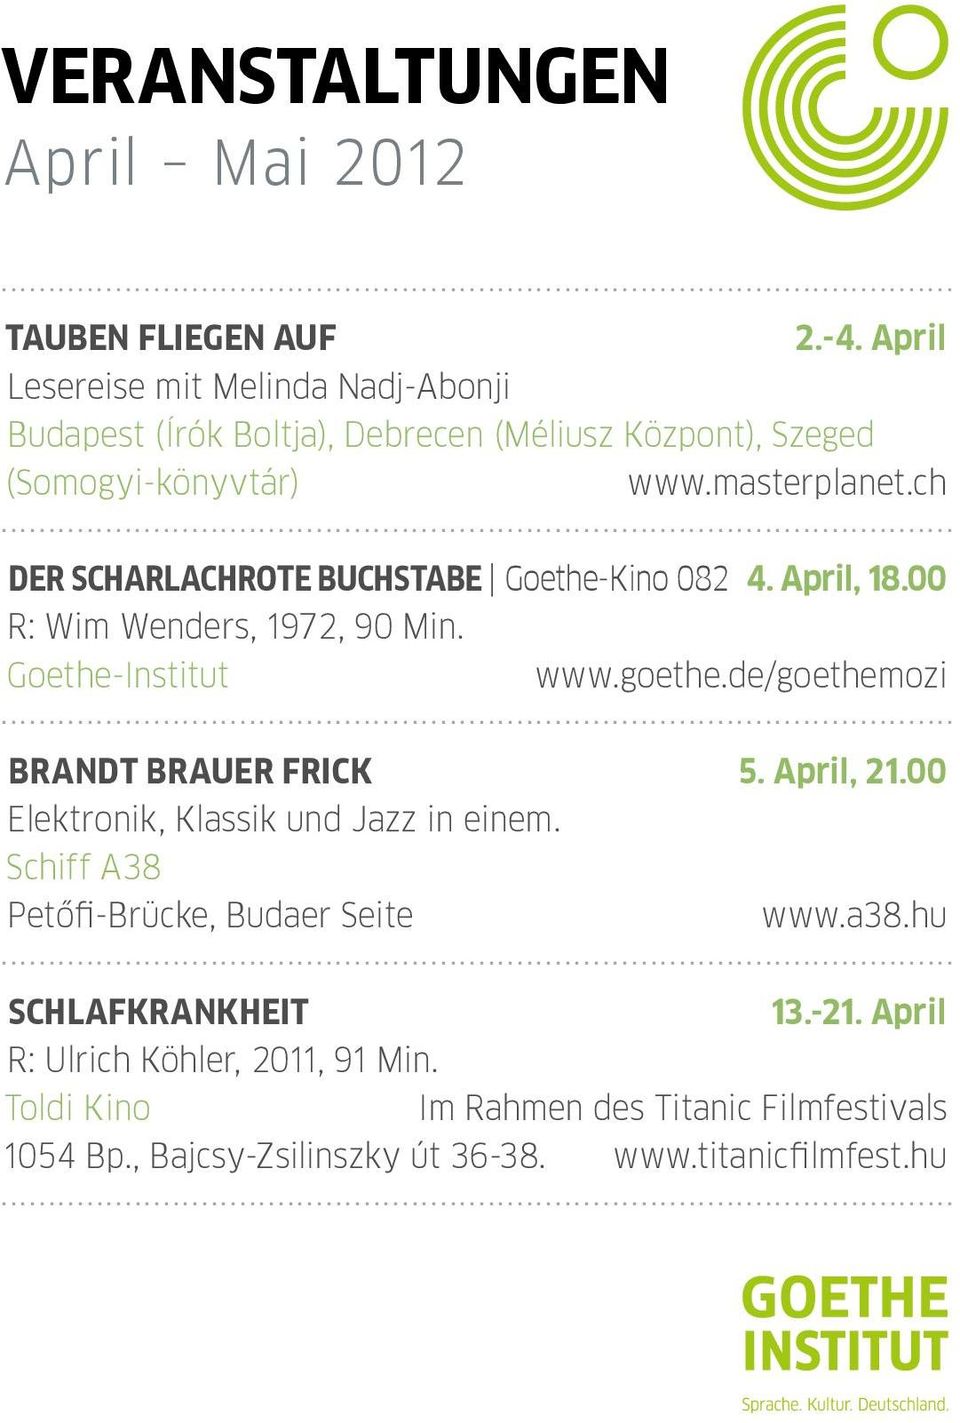 ch Der scharlachrote Buchstabe Goethe-Kino 082 4. April, 18.00 R: Wim Wenders, 1972, 90 Min. www.goethe.de/goethemozi Brandt Brauer Frick 5. April, 21.